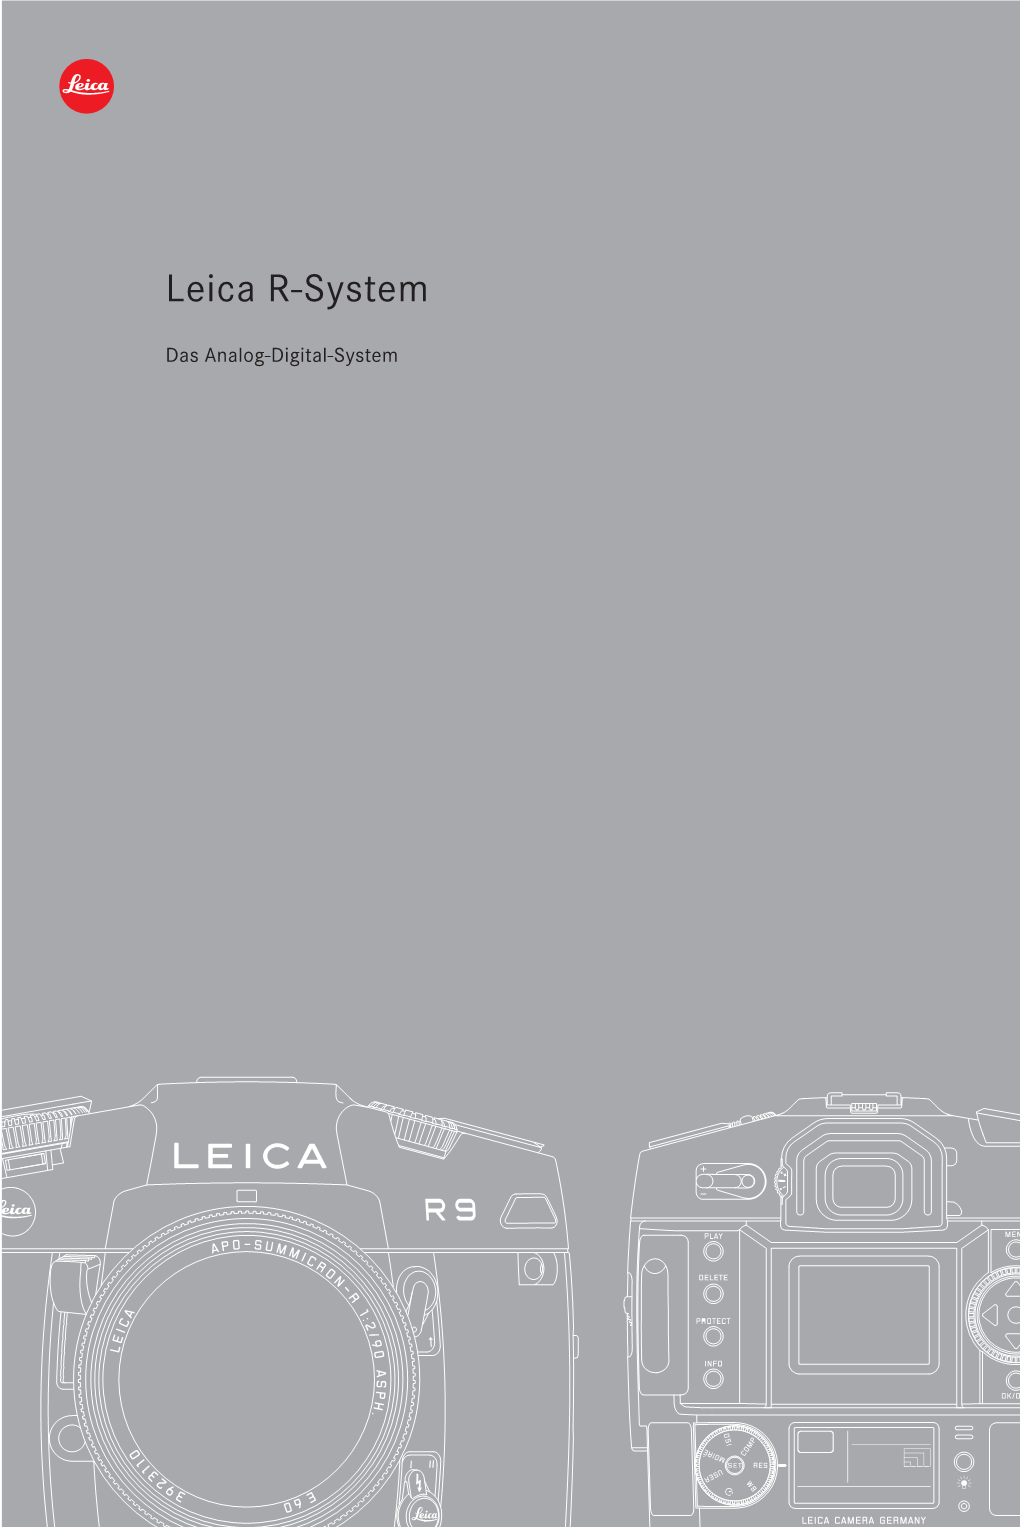 Leica R-System